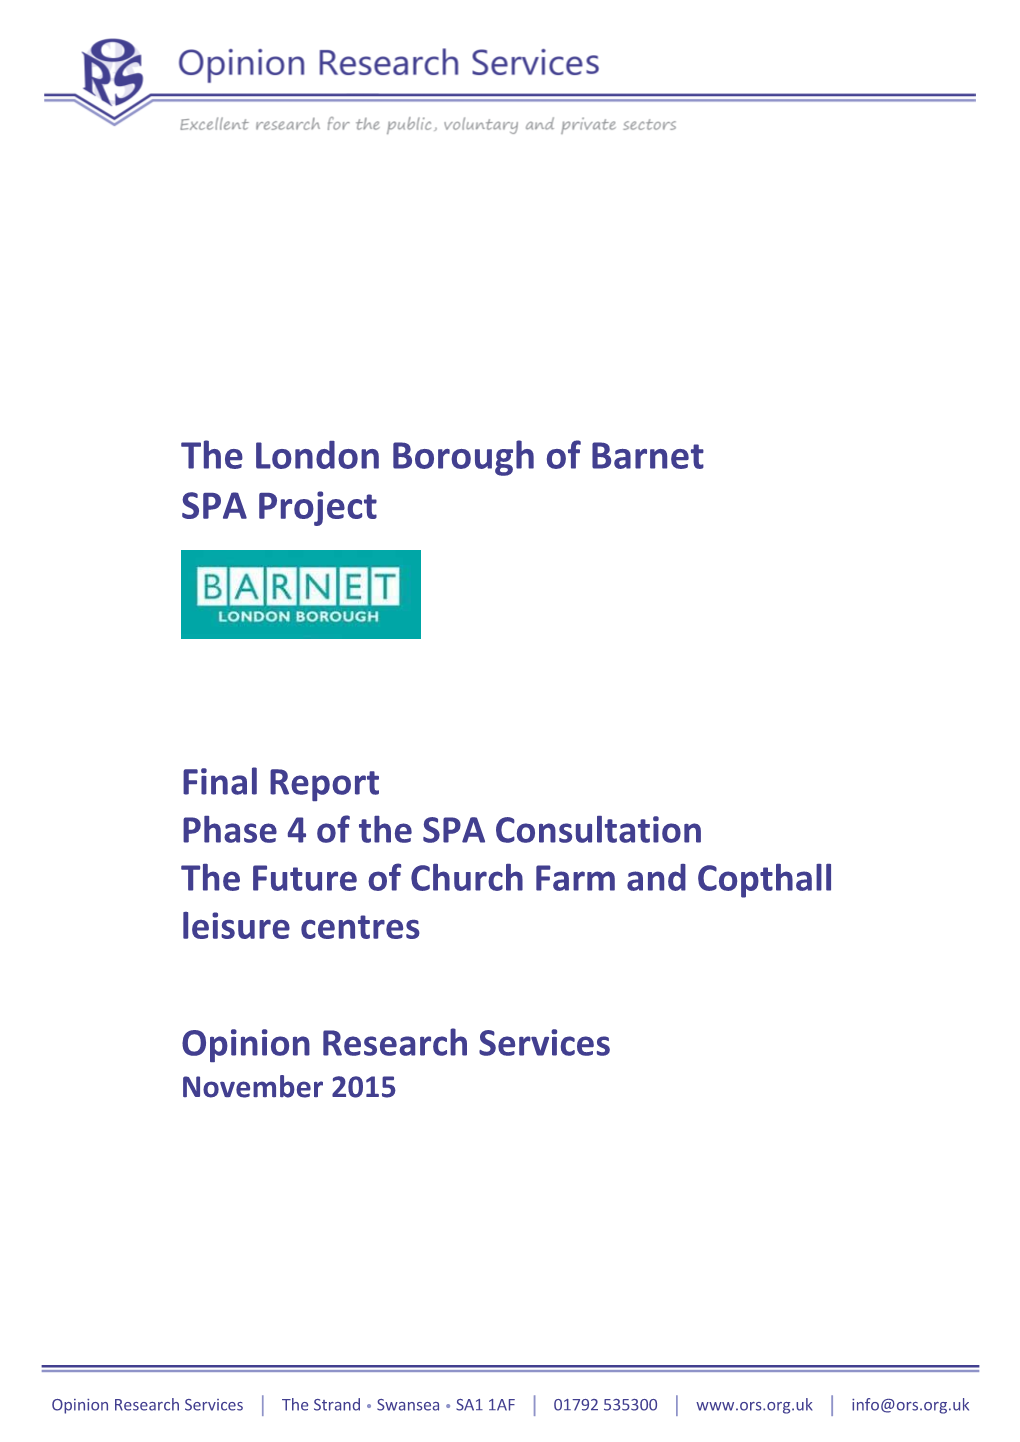 LBB SPA Project Phase 4 – Draft Interim Report